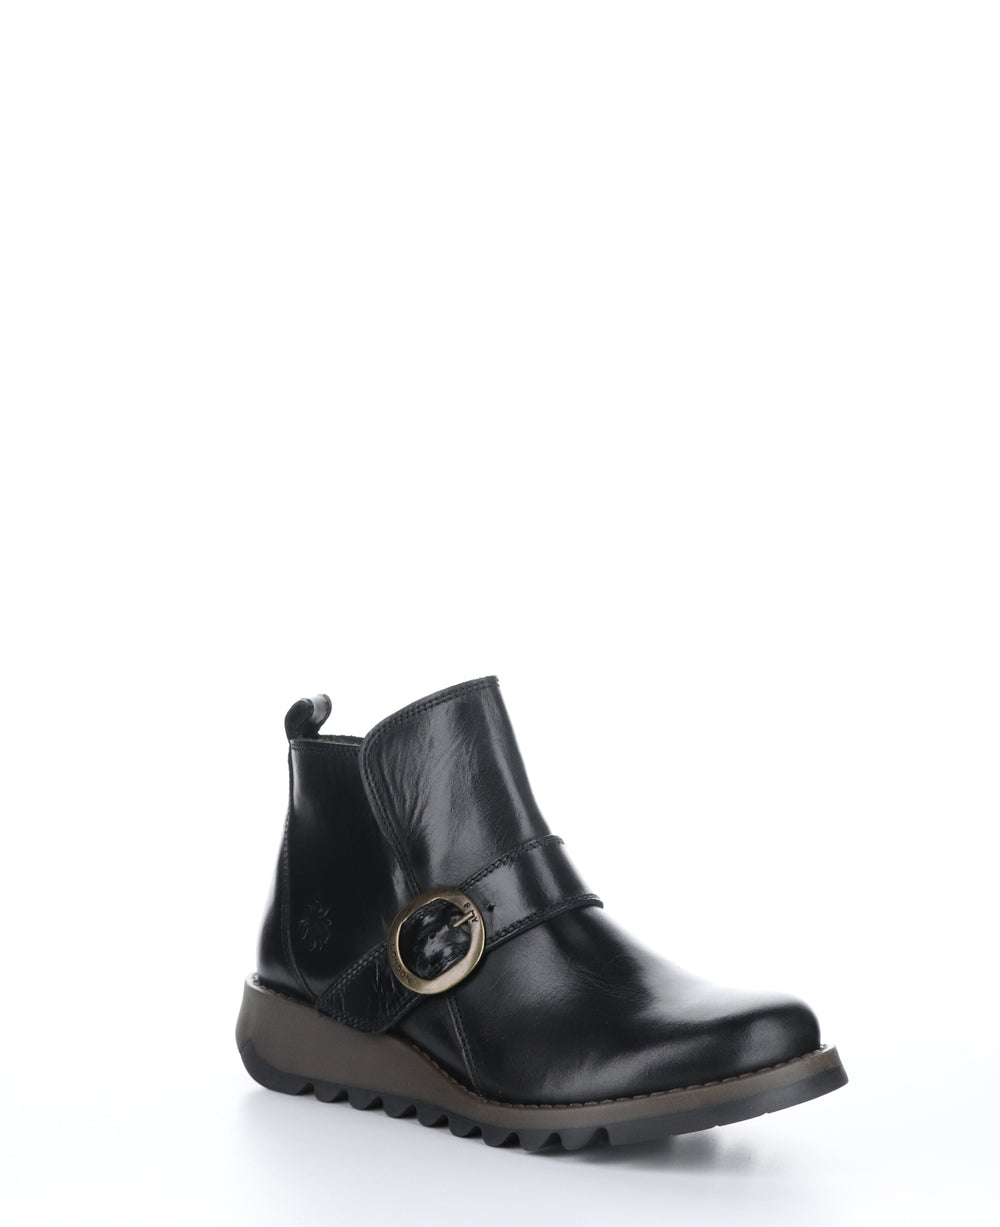 SIAS812FLY Black Zip Up Ankle Boots|SIAS812FLY Bottines avec Fermeture Zippée in Noir